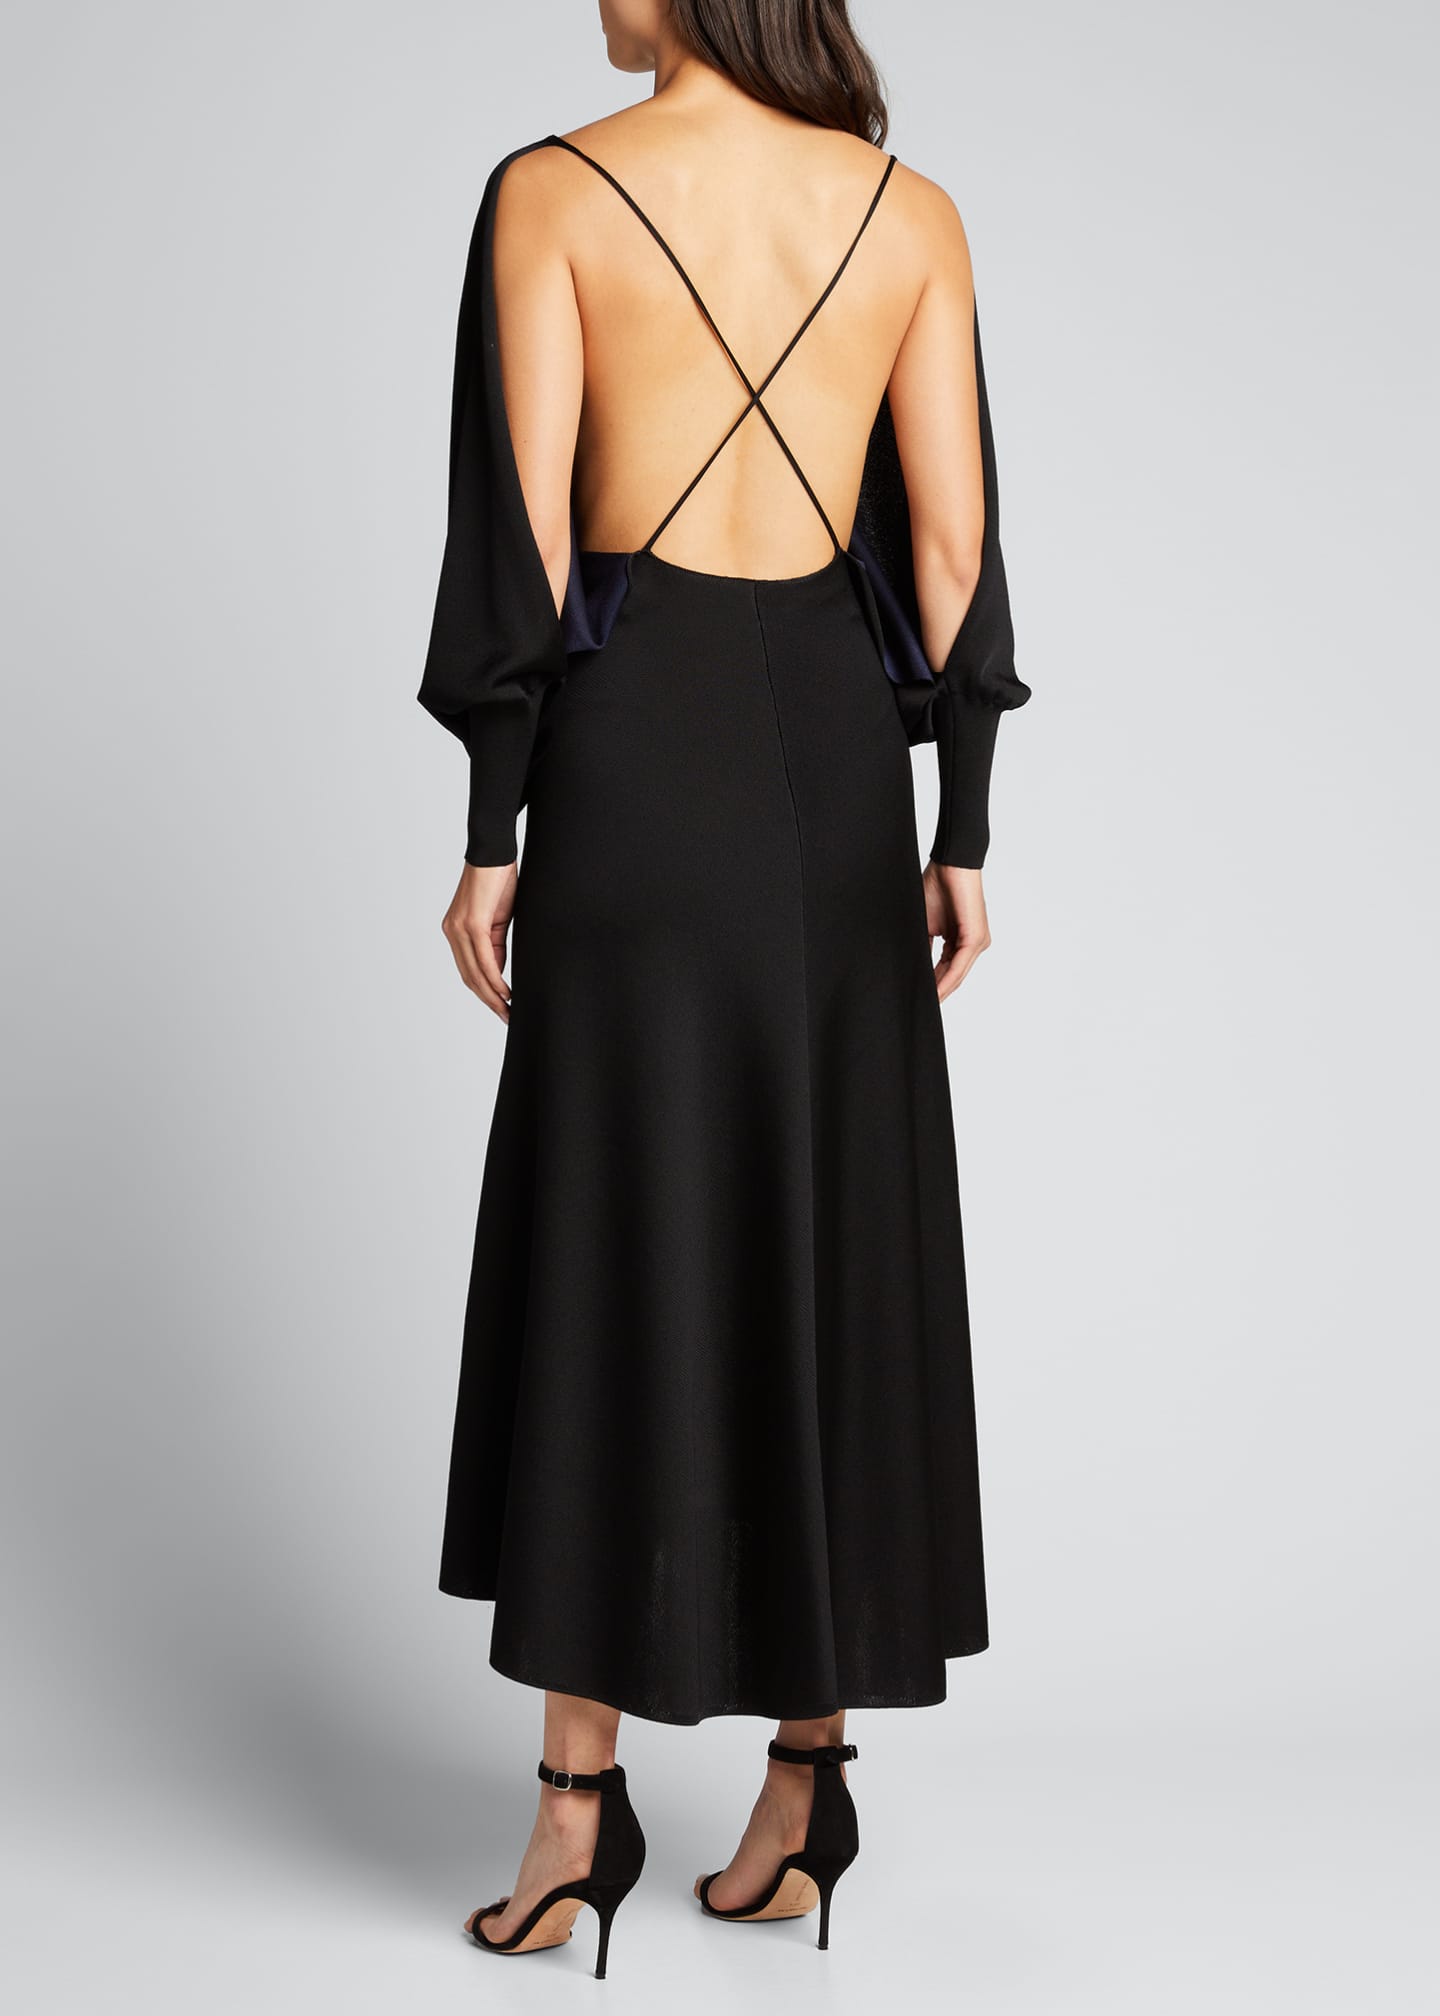 Victoria Beckham Compact Shine Draped-Sleeve Open-Back Midi Dress ...